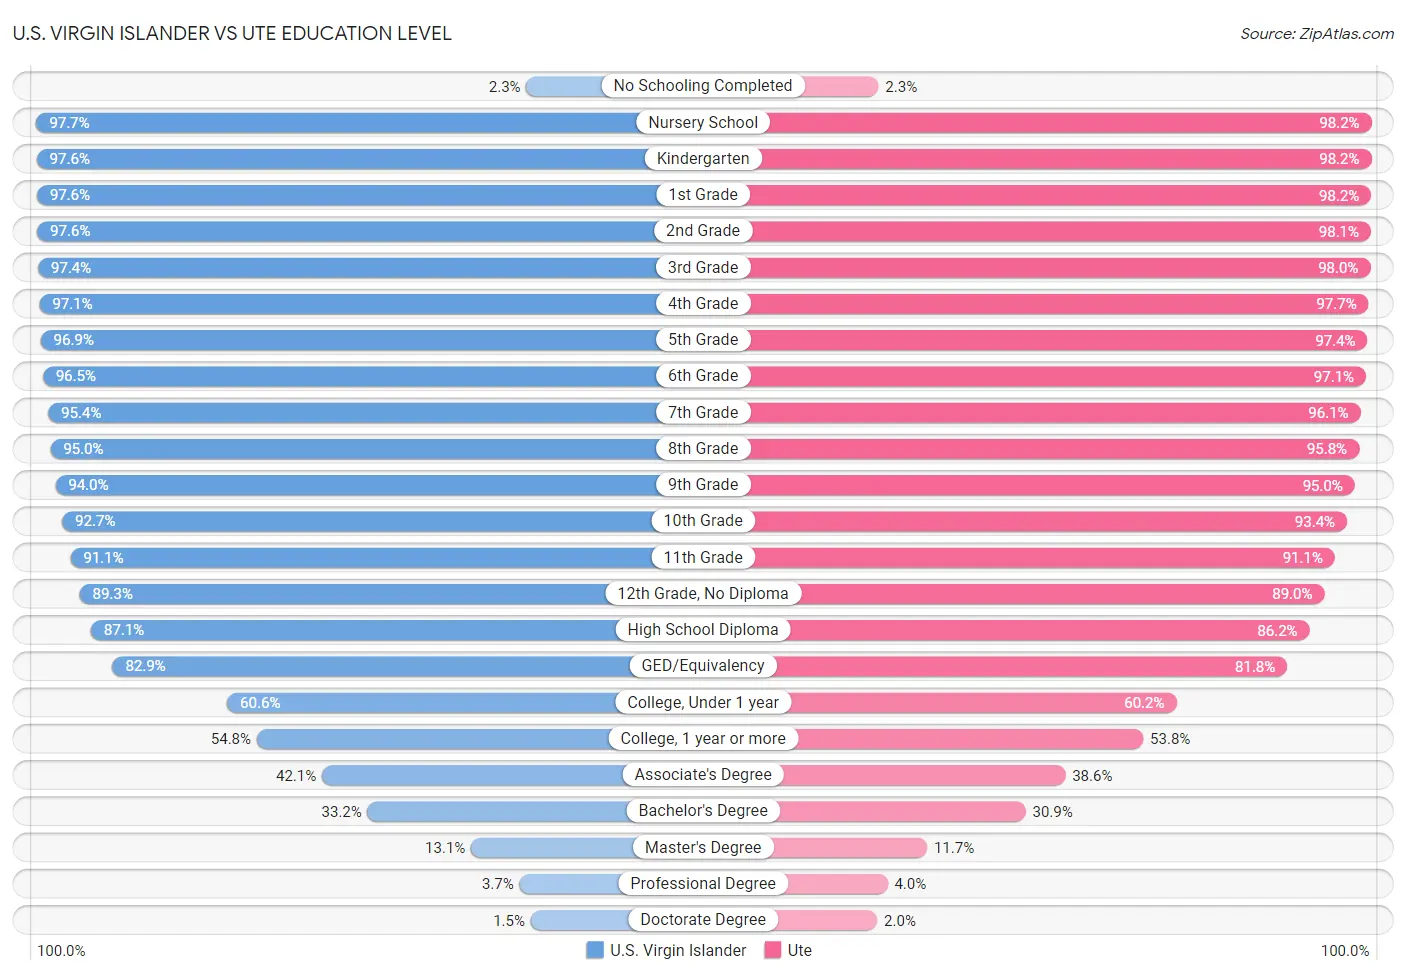 U.S. Virgin Islander vs Ute Education Level